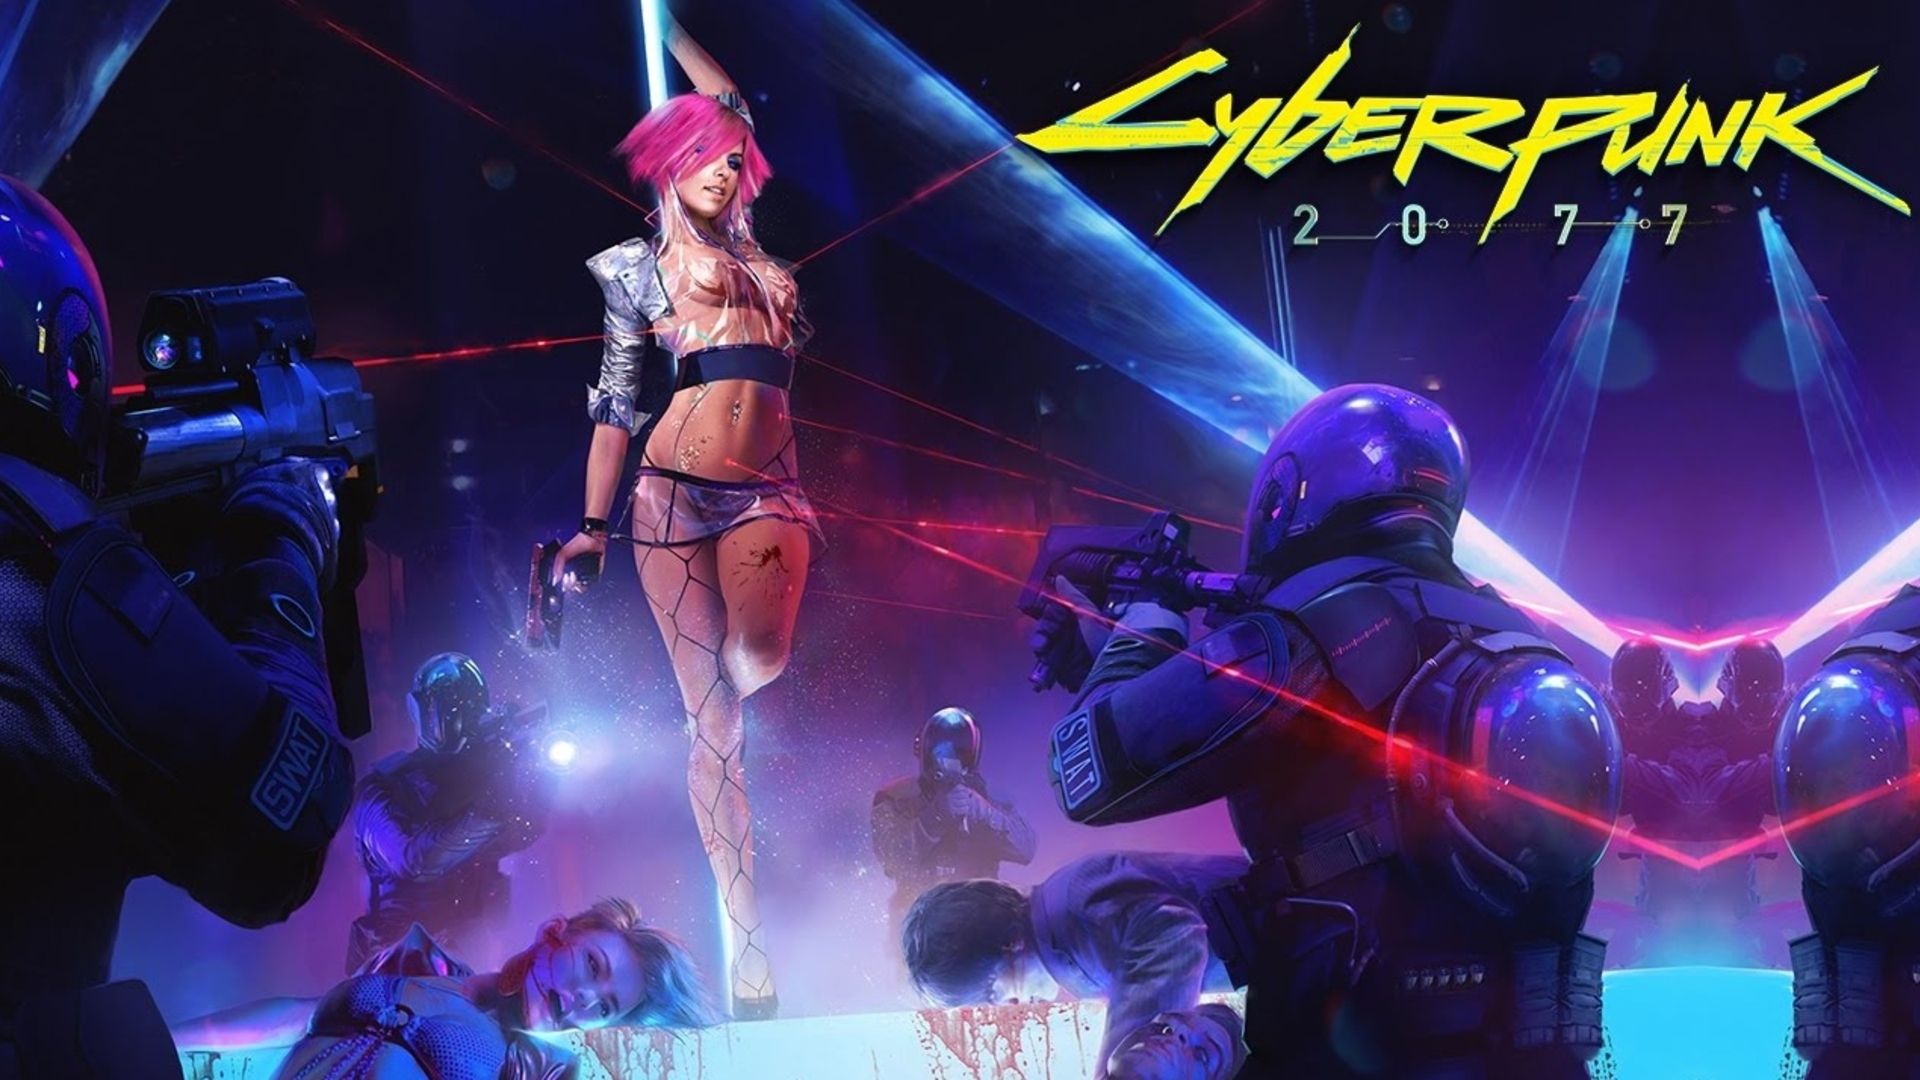 Download wallpaper: Cyberpunk 2077 2 1920x1080